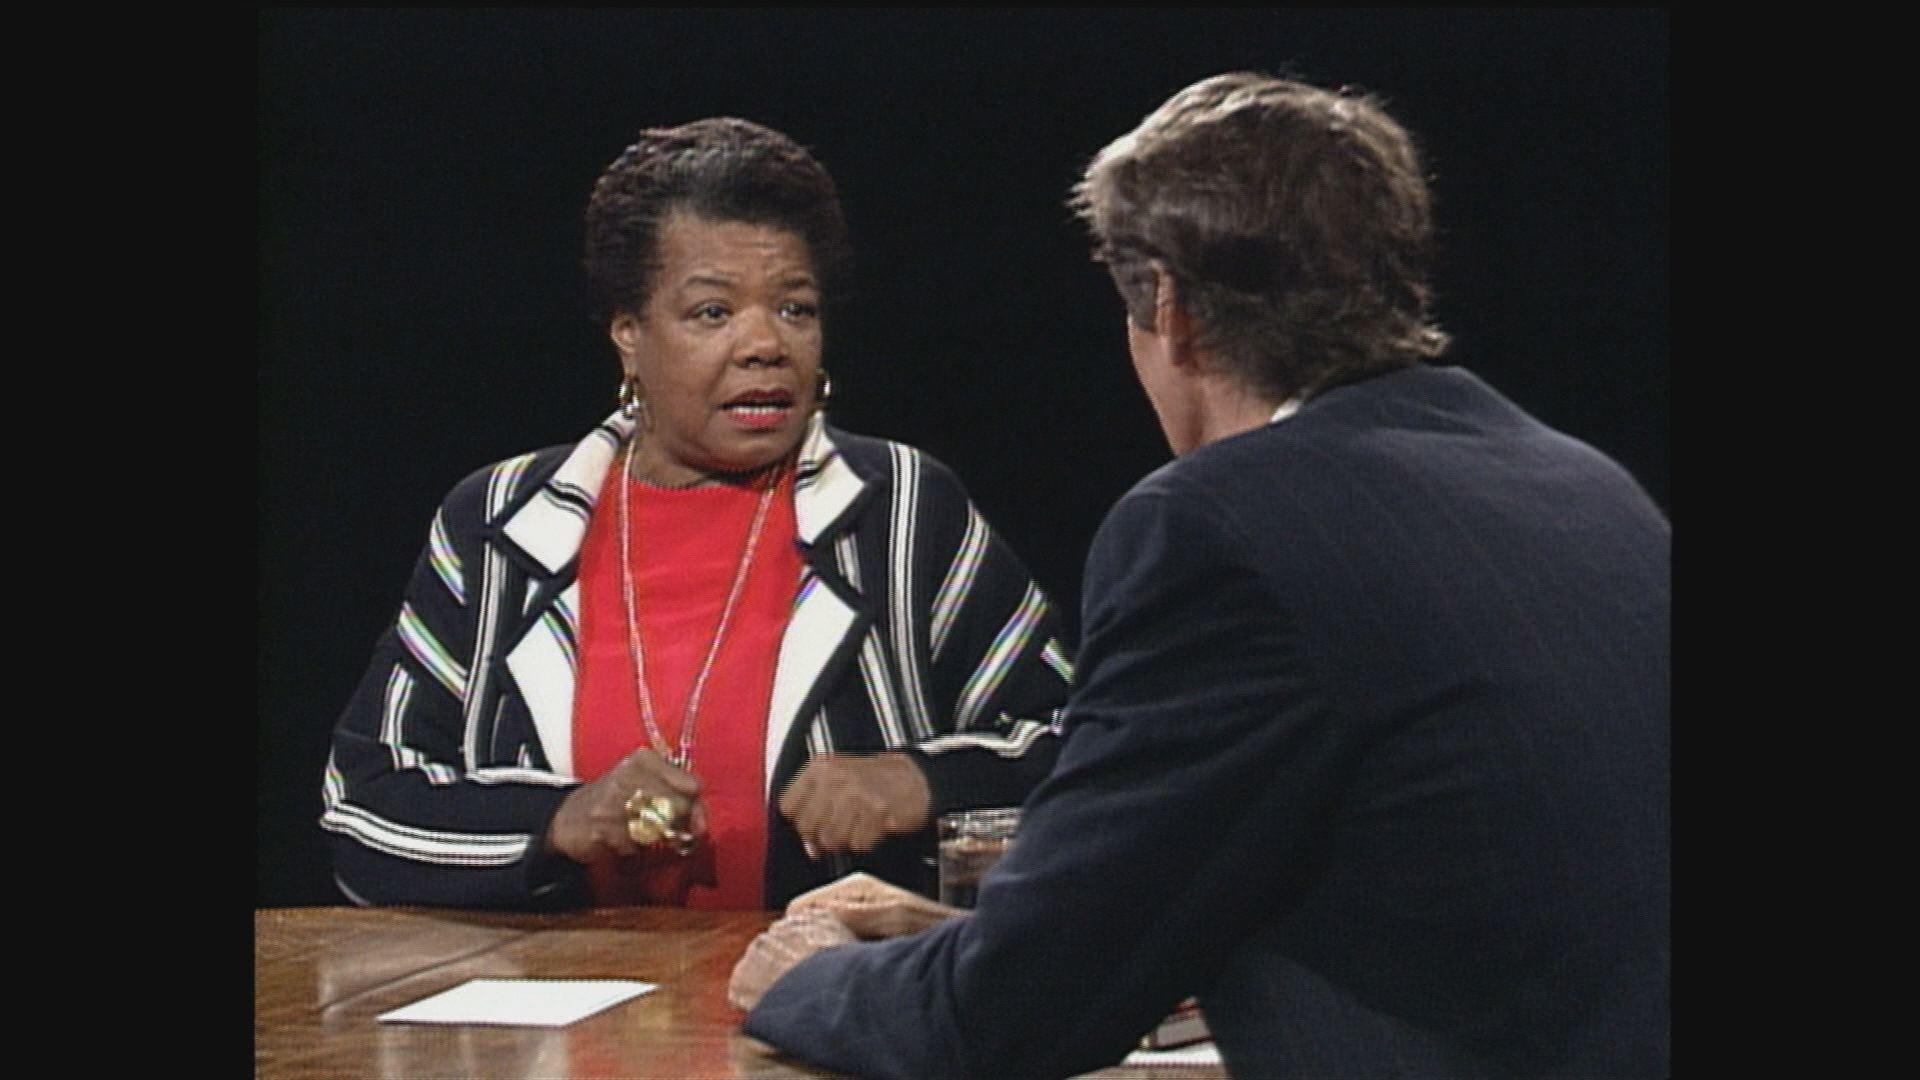 Remembering Maya Angelou 